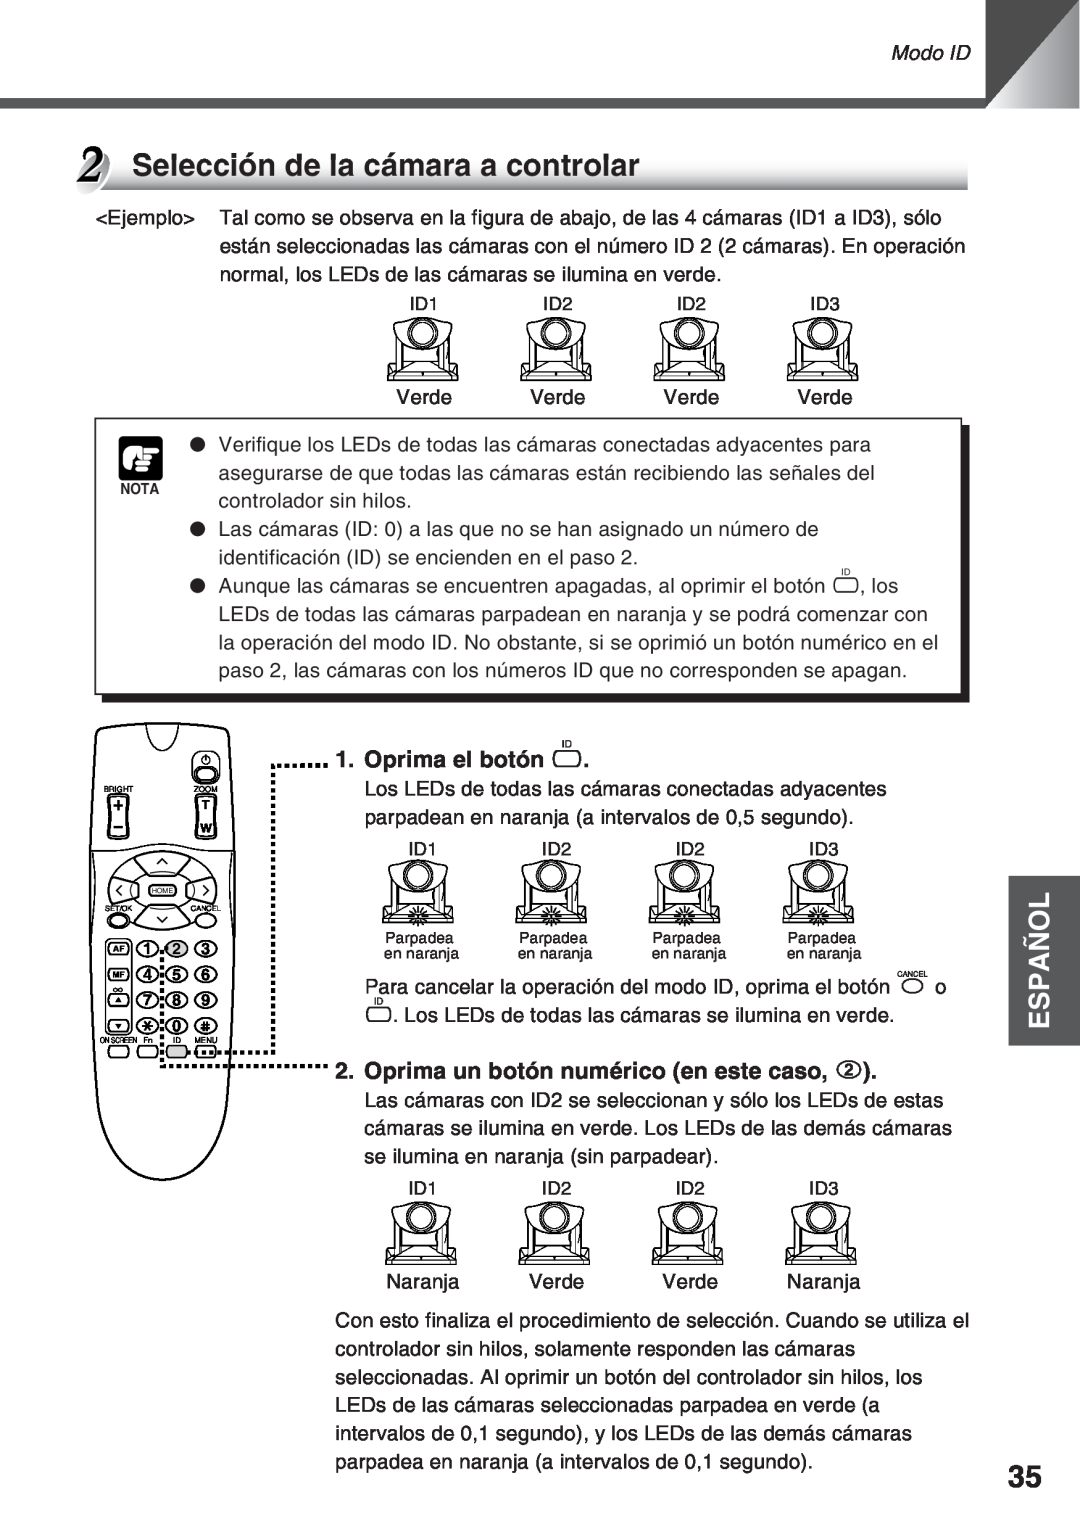 Canon VC-C50IR Selección de la cámara a controlar, Español, Oprima el botón, Oprima un botón numérico en este caso 